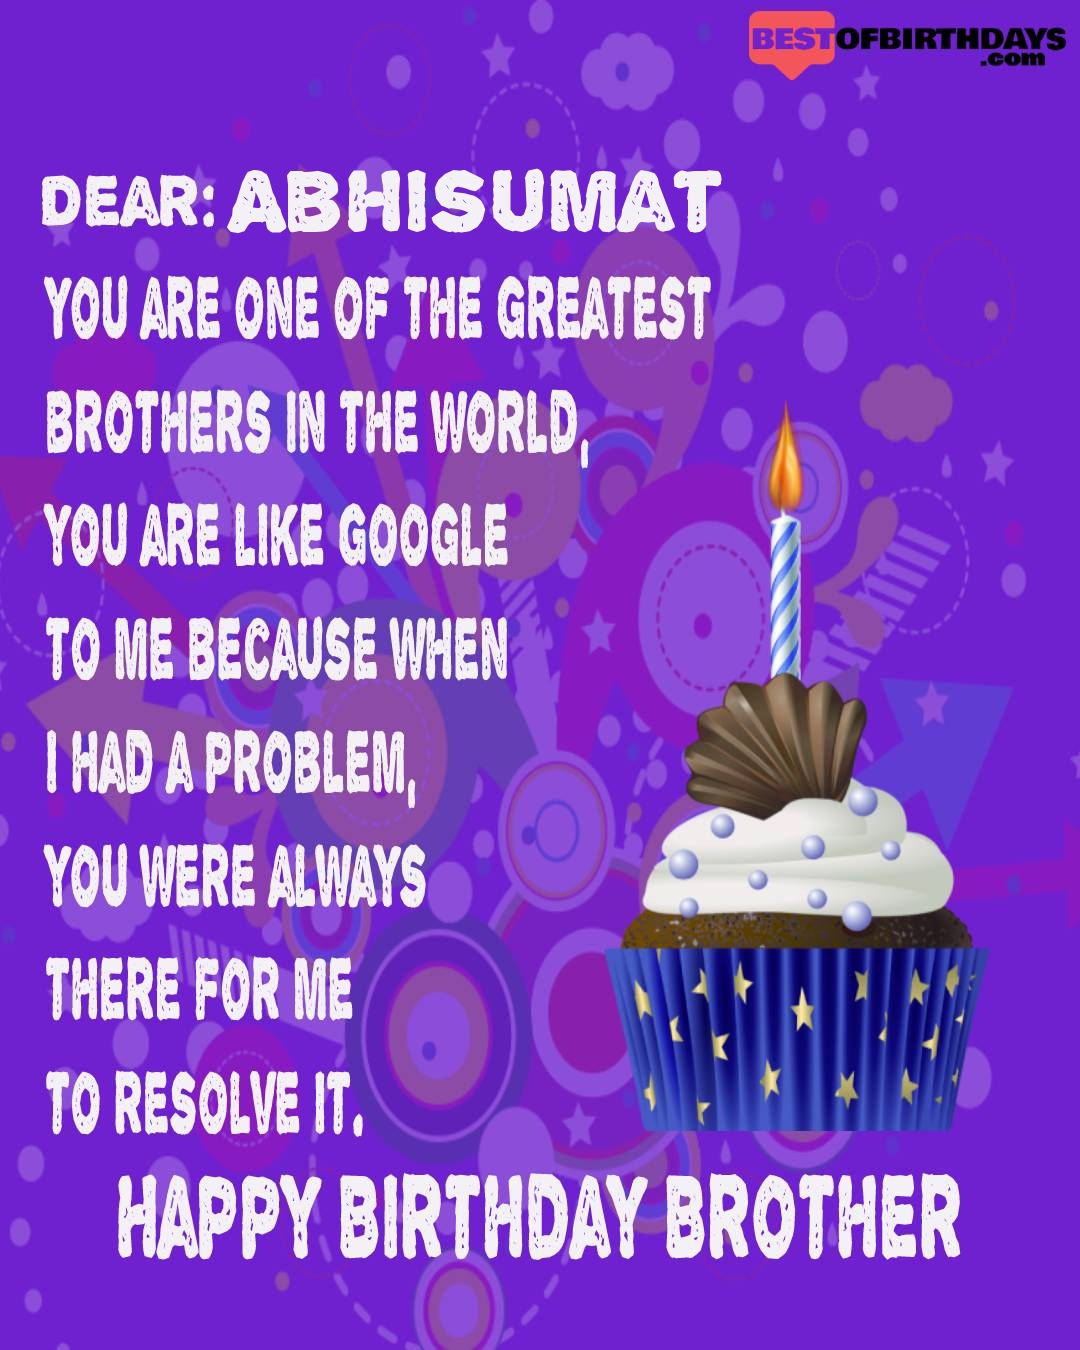 Happy birthday abhisumat bhai brother bro